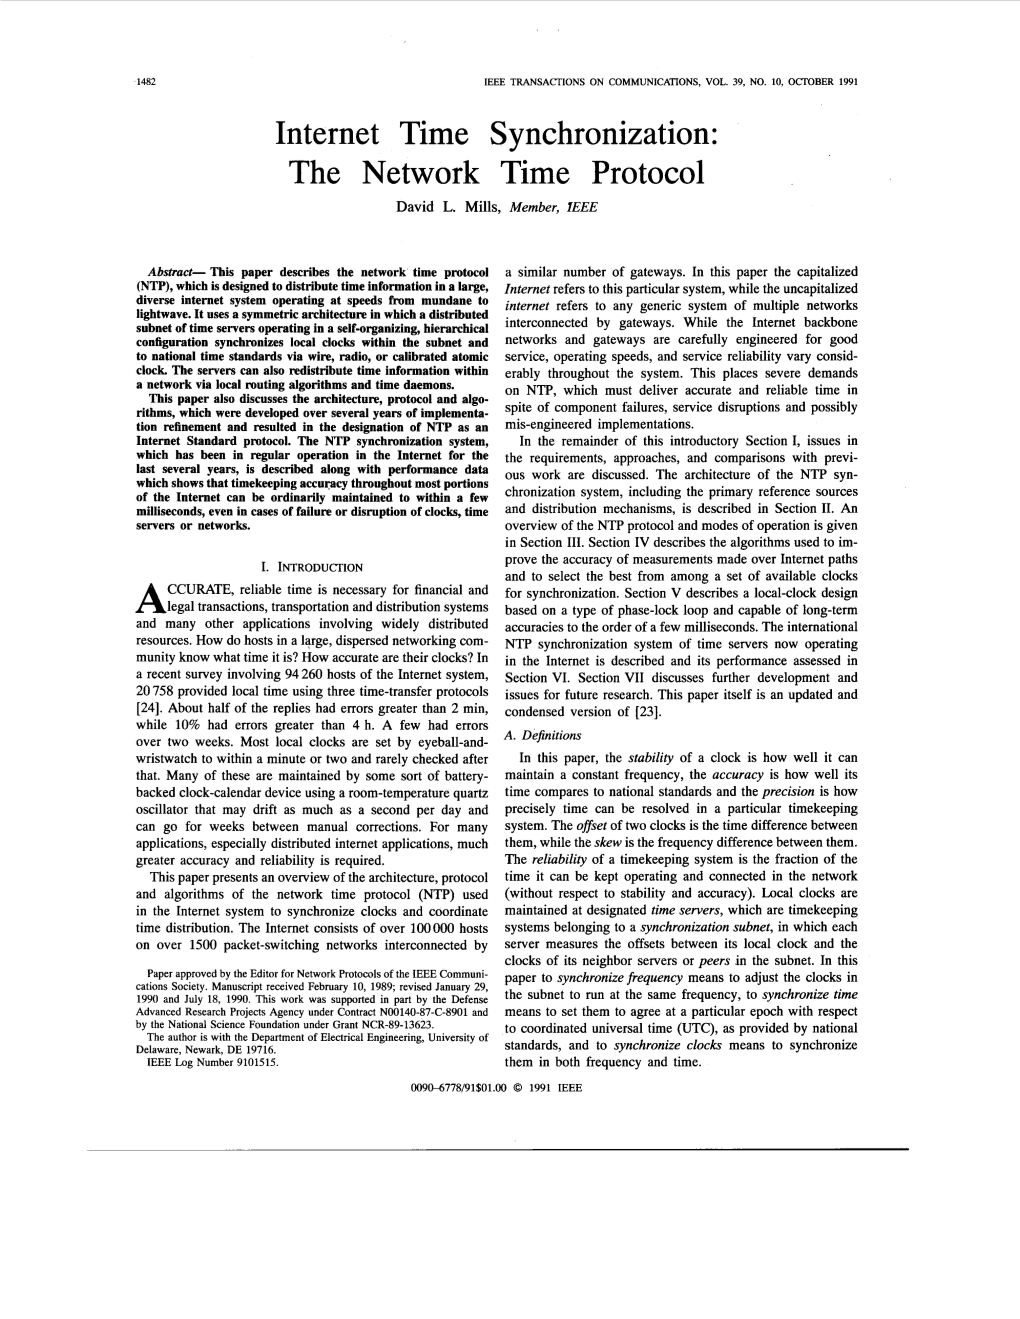 The Network Time Protocol David L